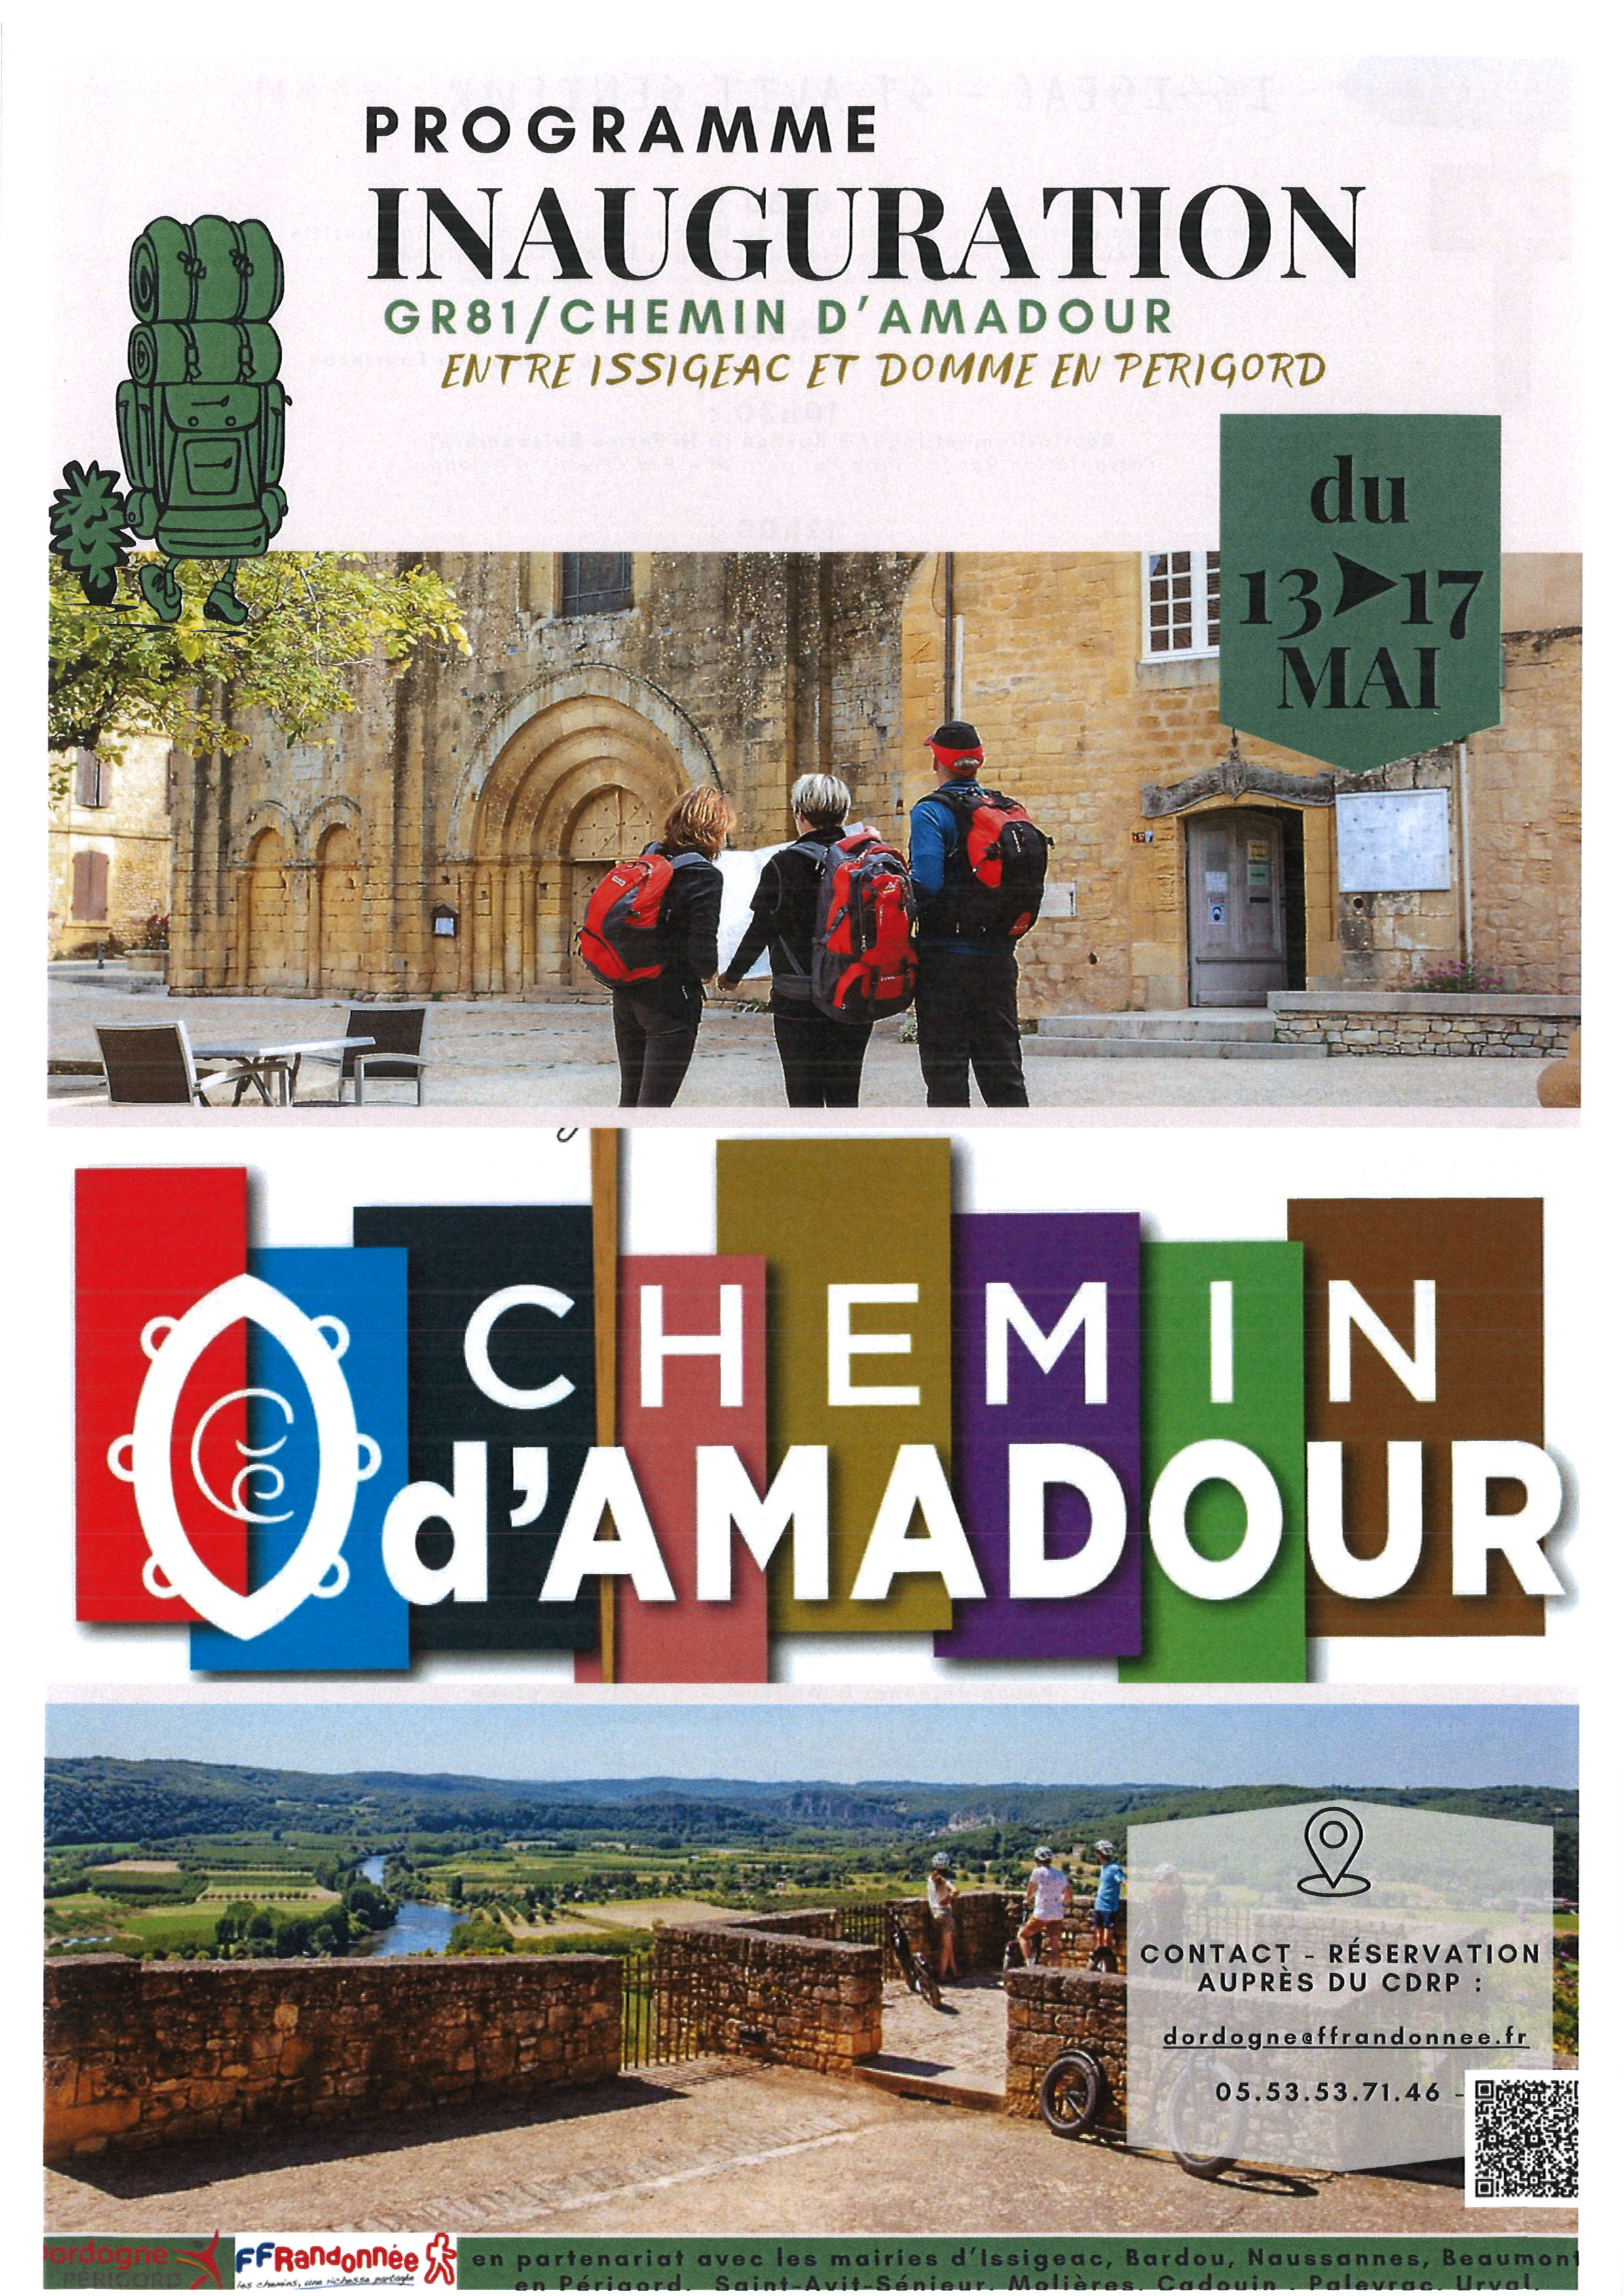 CHEMIN D'AMADOUR (2).jpg